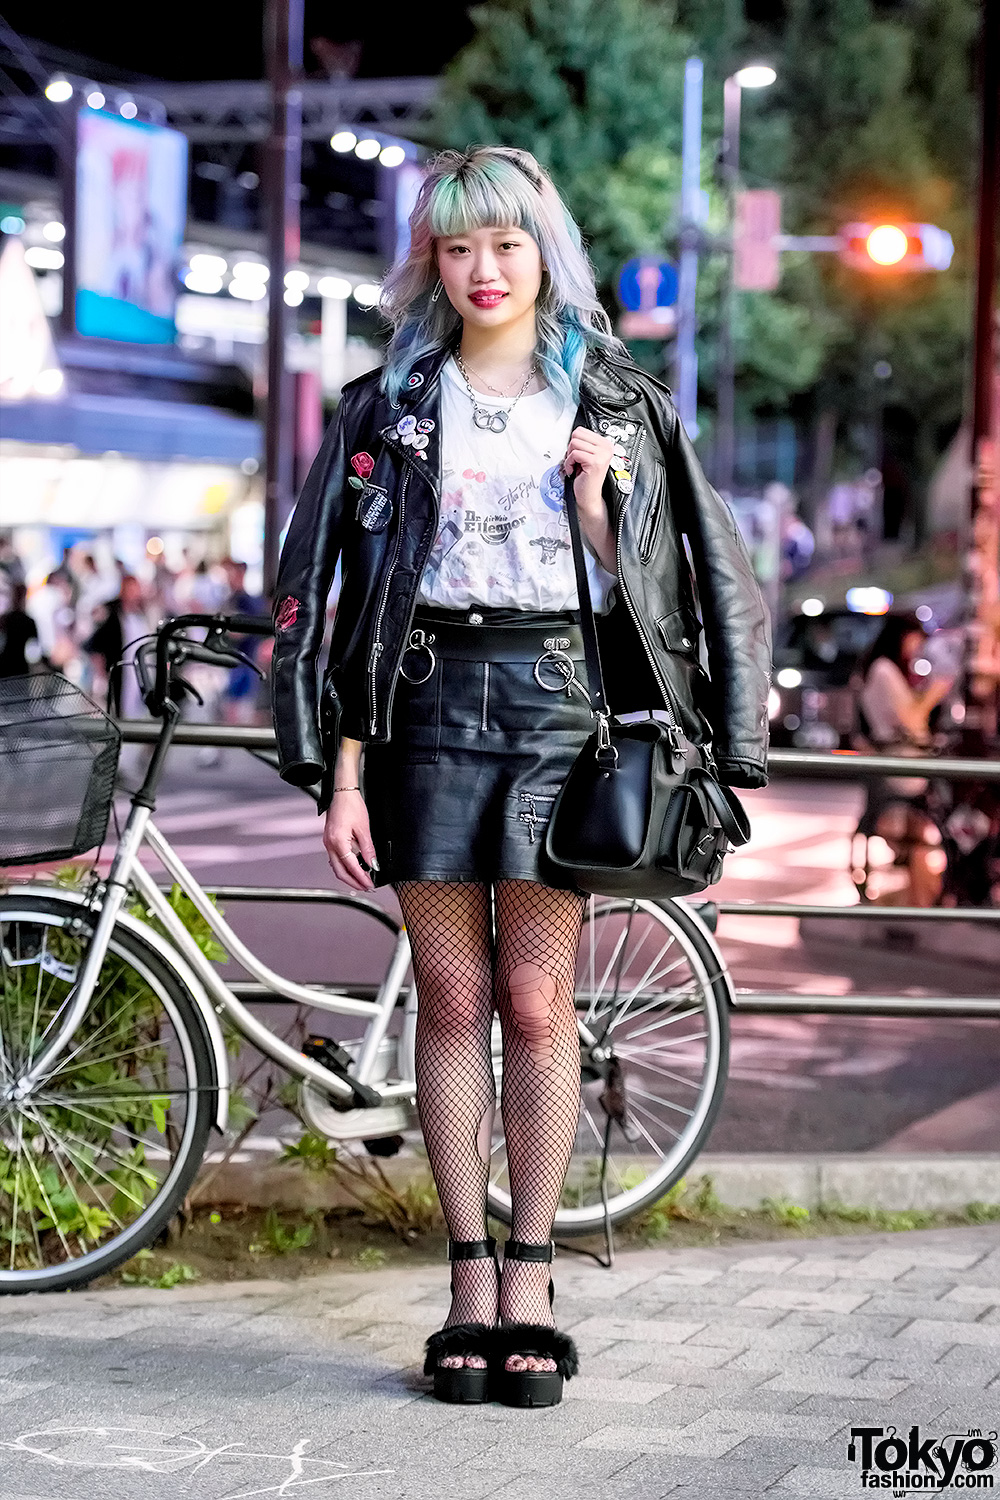 Elleanor in Harajuku w/ Schott Leather Jacket, Bubbles Skirt, Fishnets & Grafea Bag